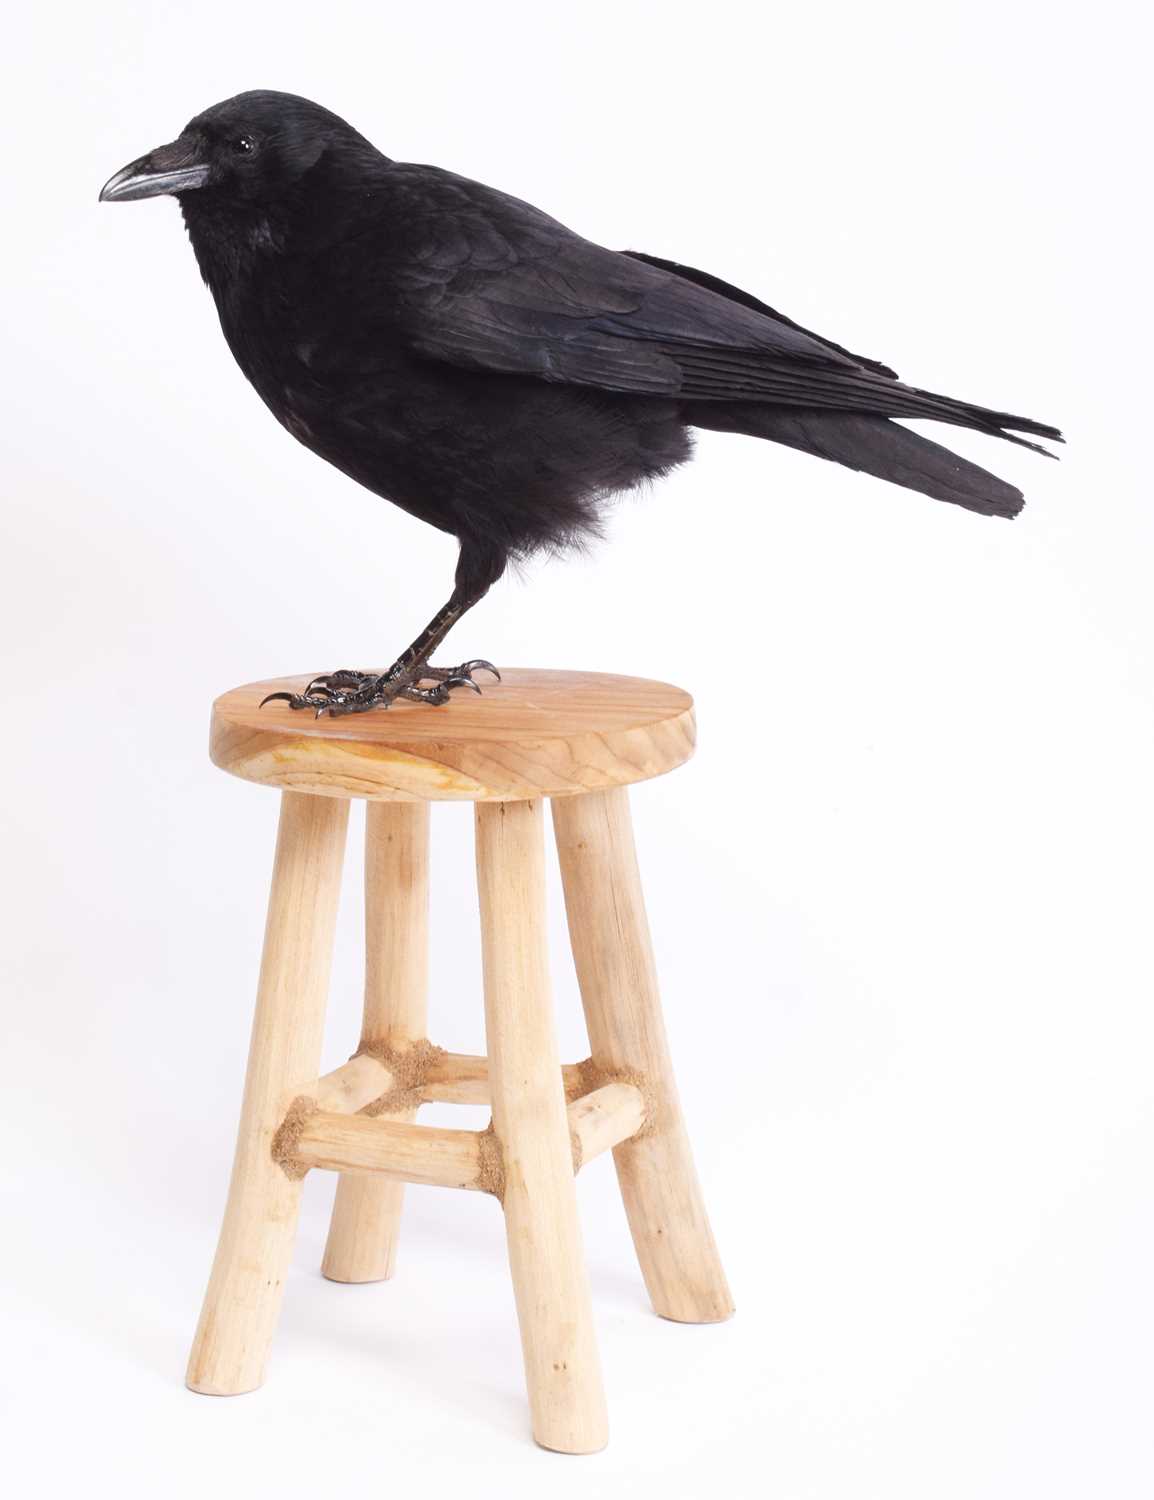 Taxidermy: A Carrion Crow on a Stool (Corvus carone), modern, by Adrian Johnstone, Taxidermy,